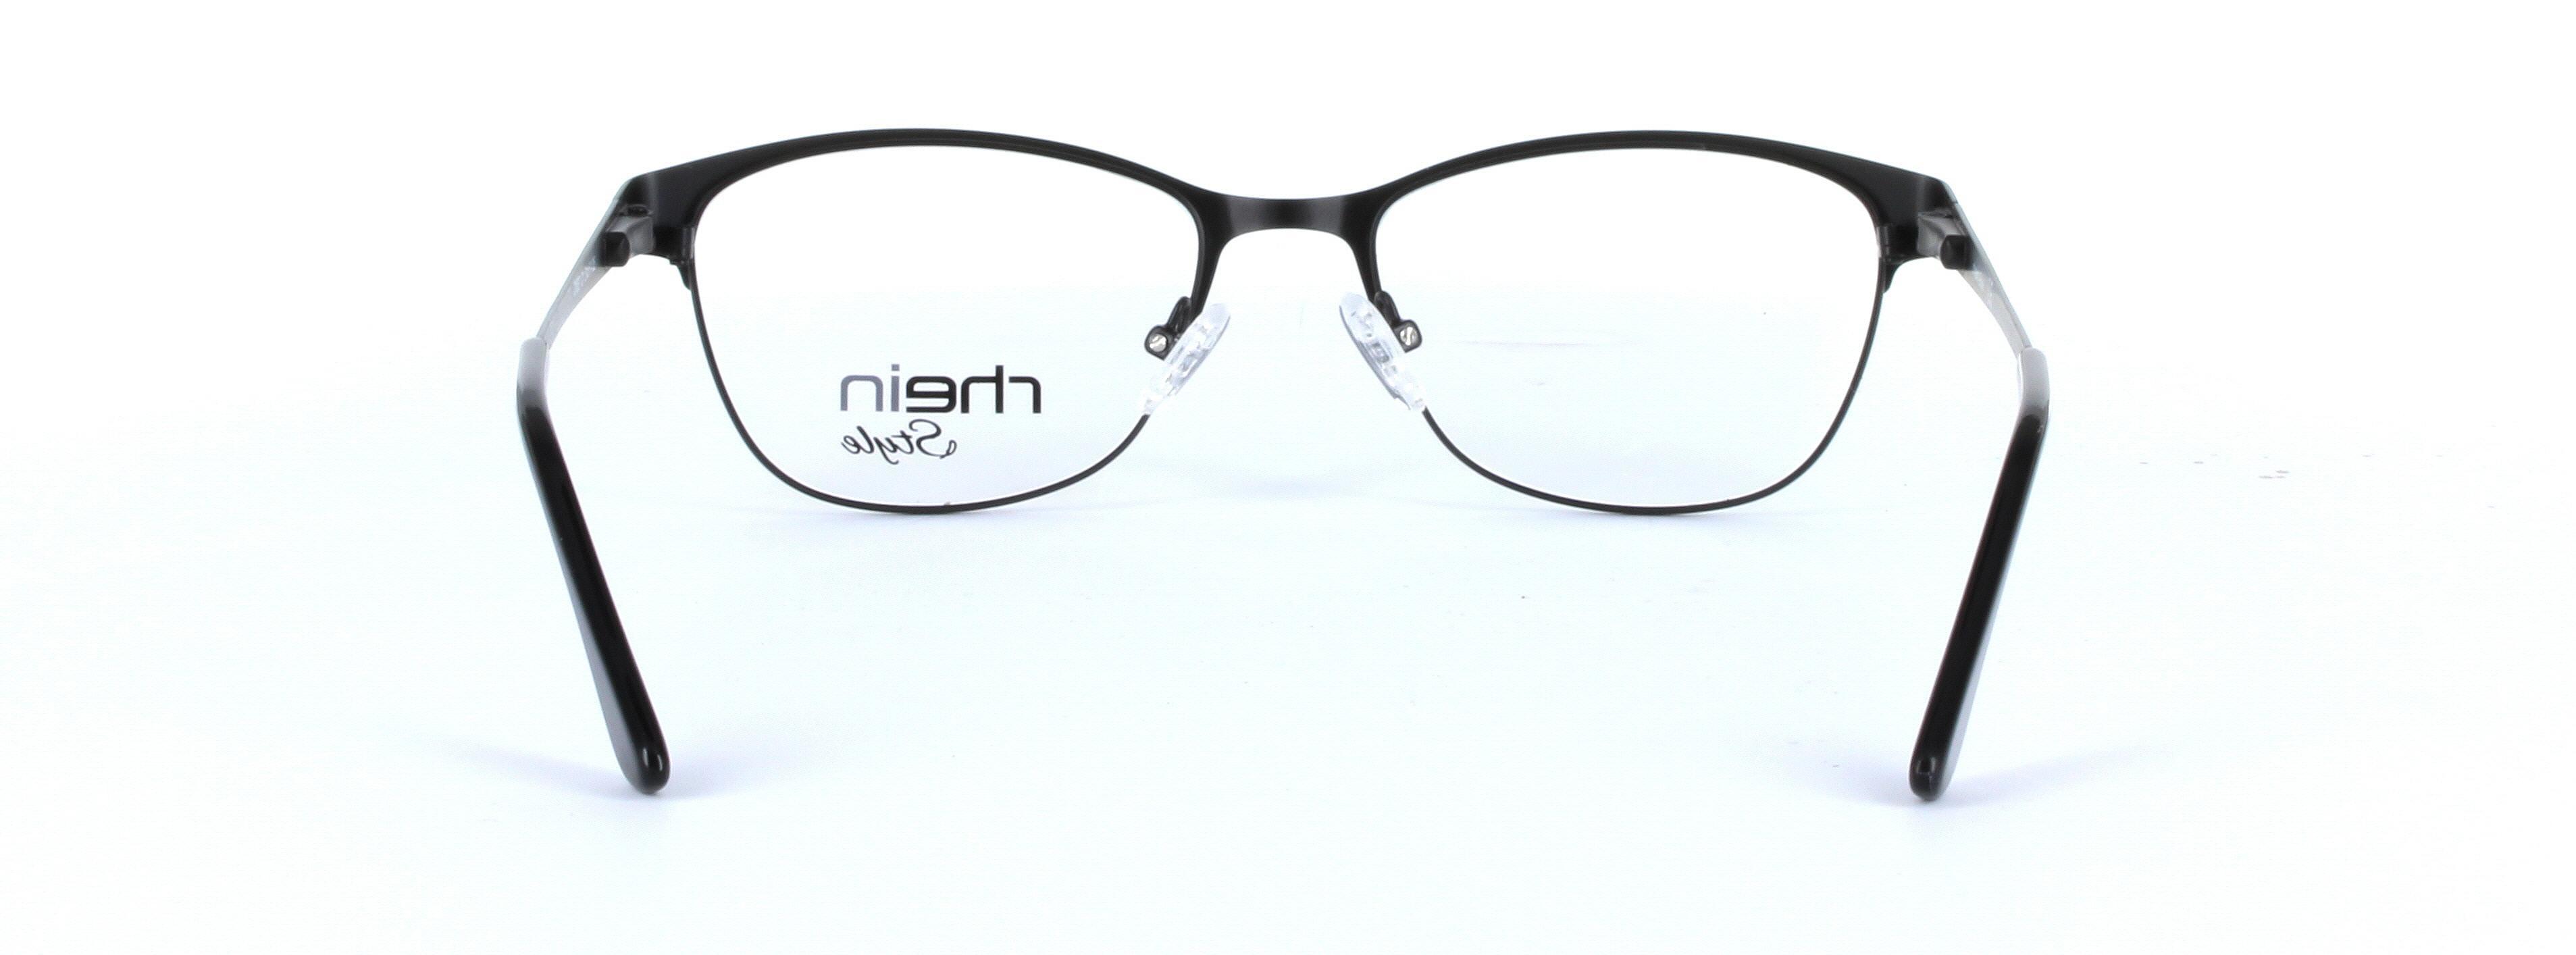 Harvey Black Full Rim Oval Metal Glasses - Image View 3